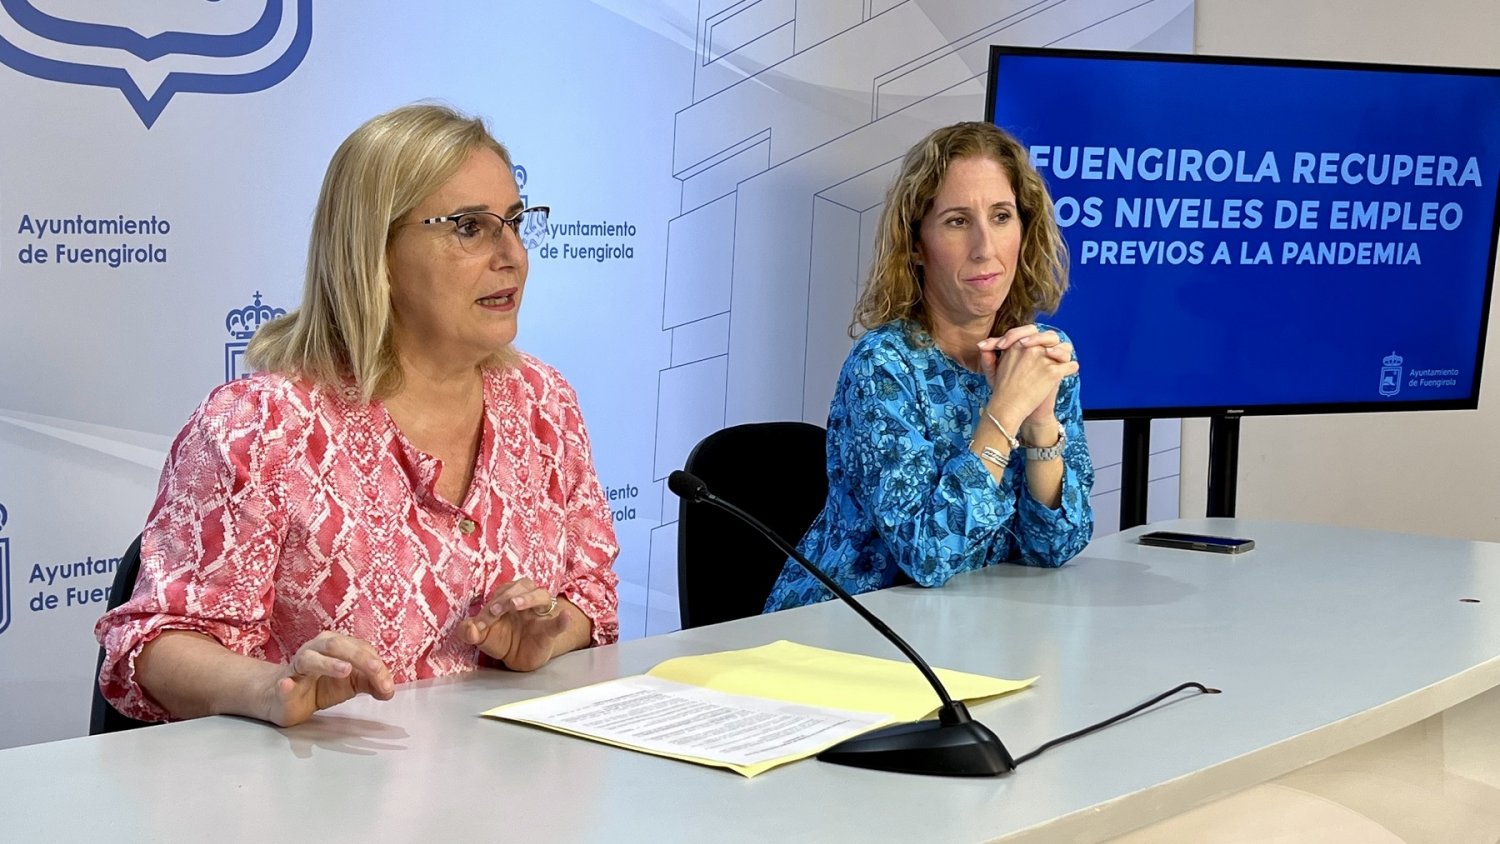 Fuengirola recupera los niveles de empleo previos a la pandemia